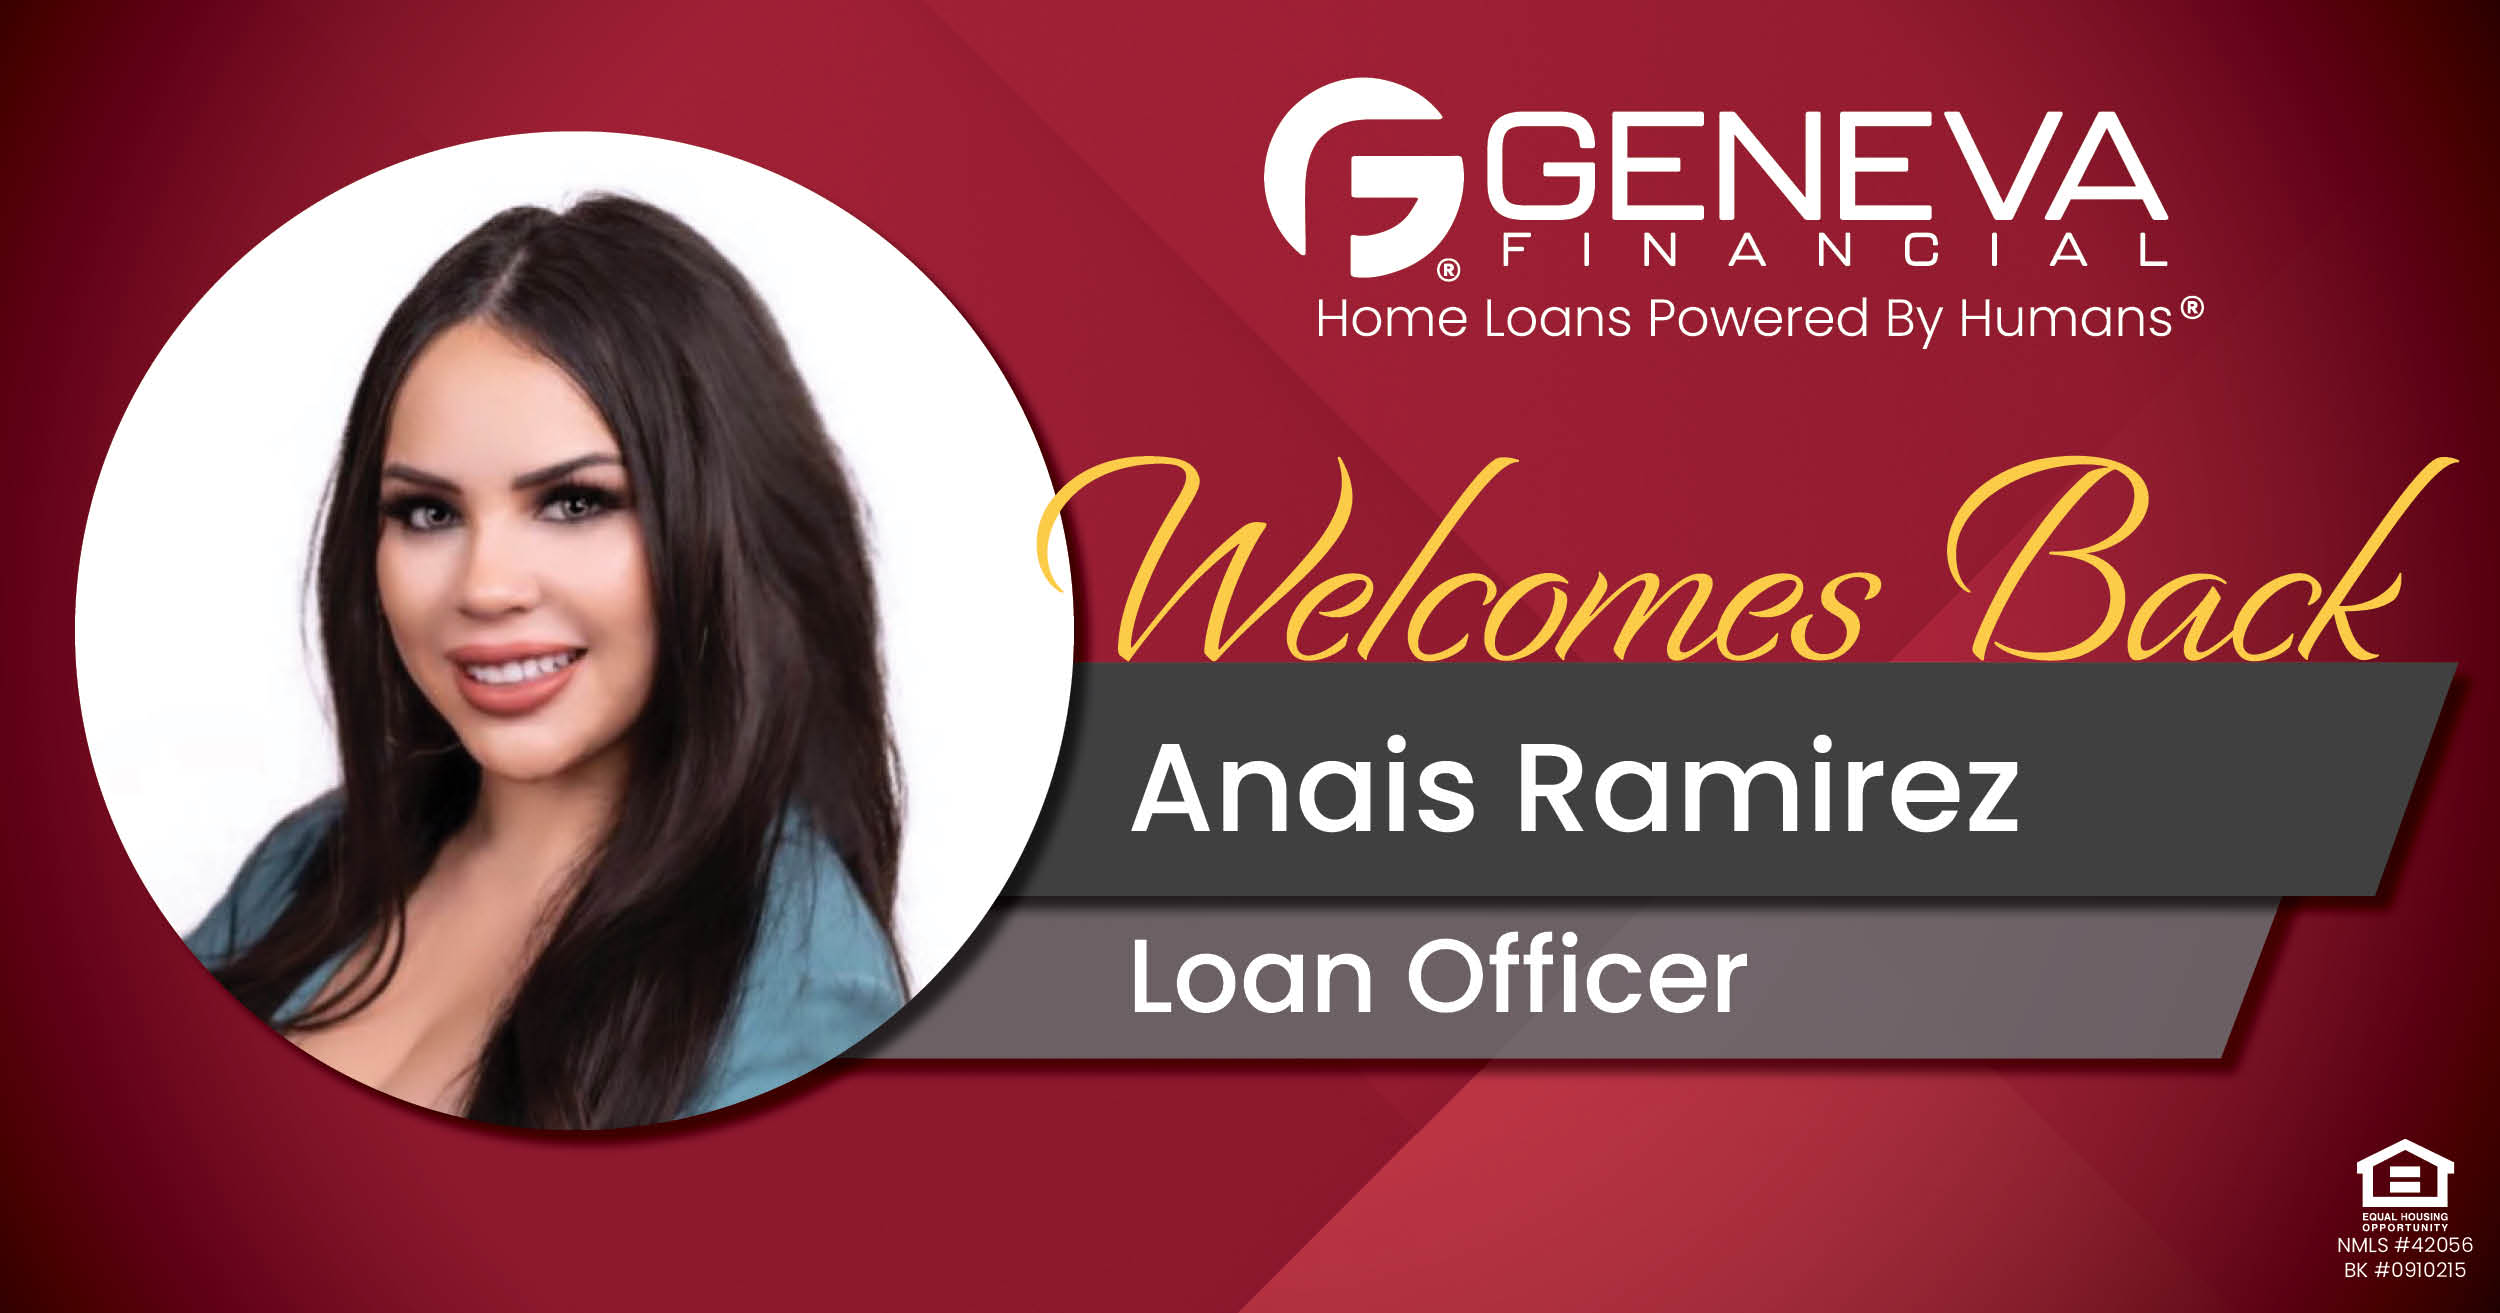 Geneva Financial Welcomes Back Loan Officer Anais Ramirez to Avondale, Arizona– Home Loans Powered by Humans®.